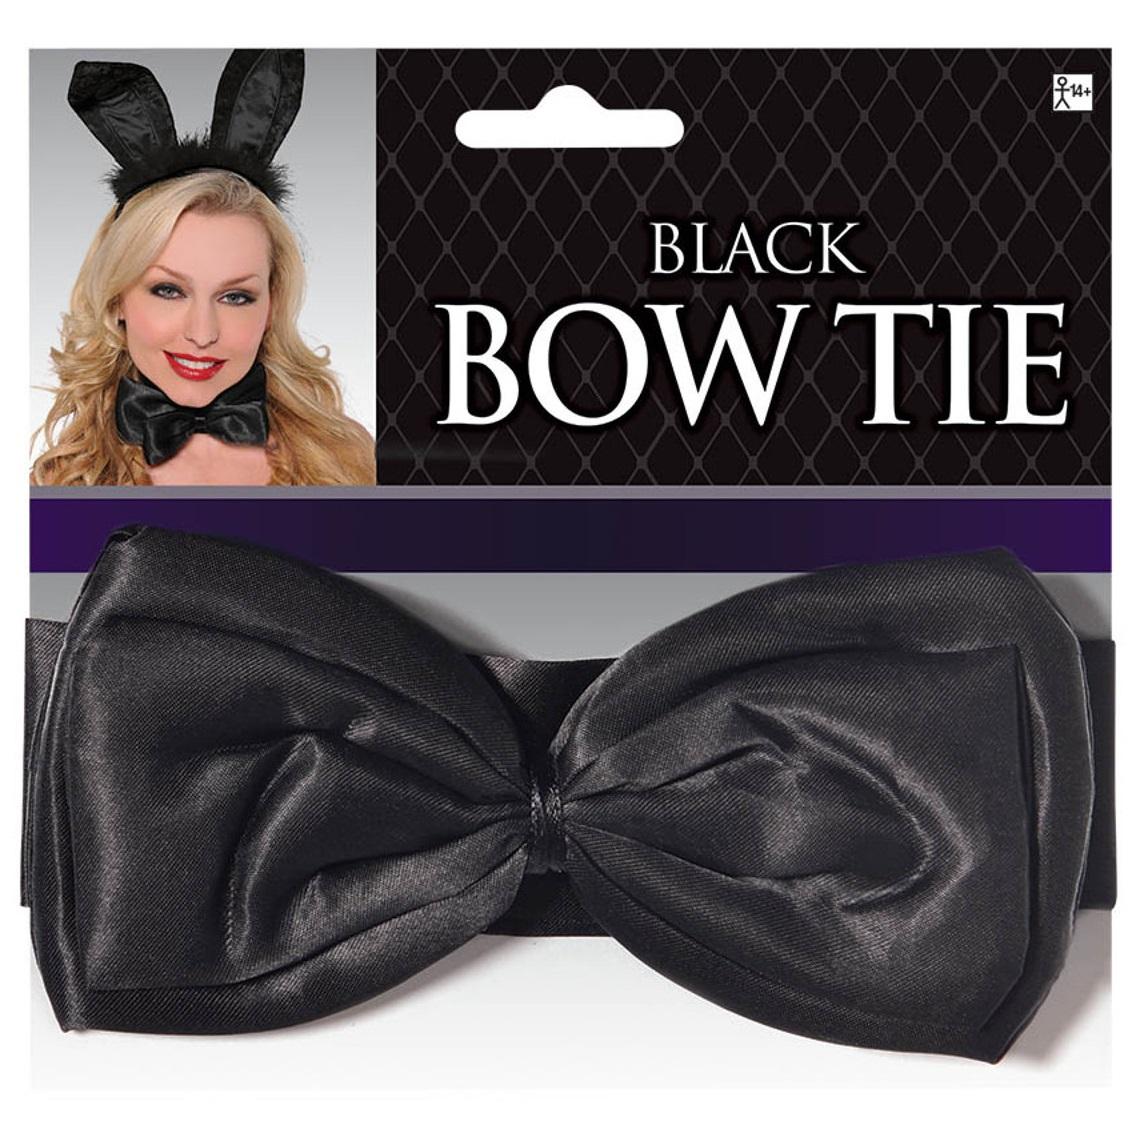 Black Bow Tie Costumes & Apparel - Party Centre